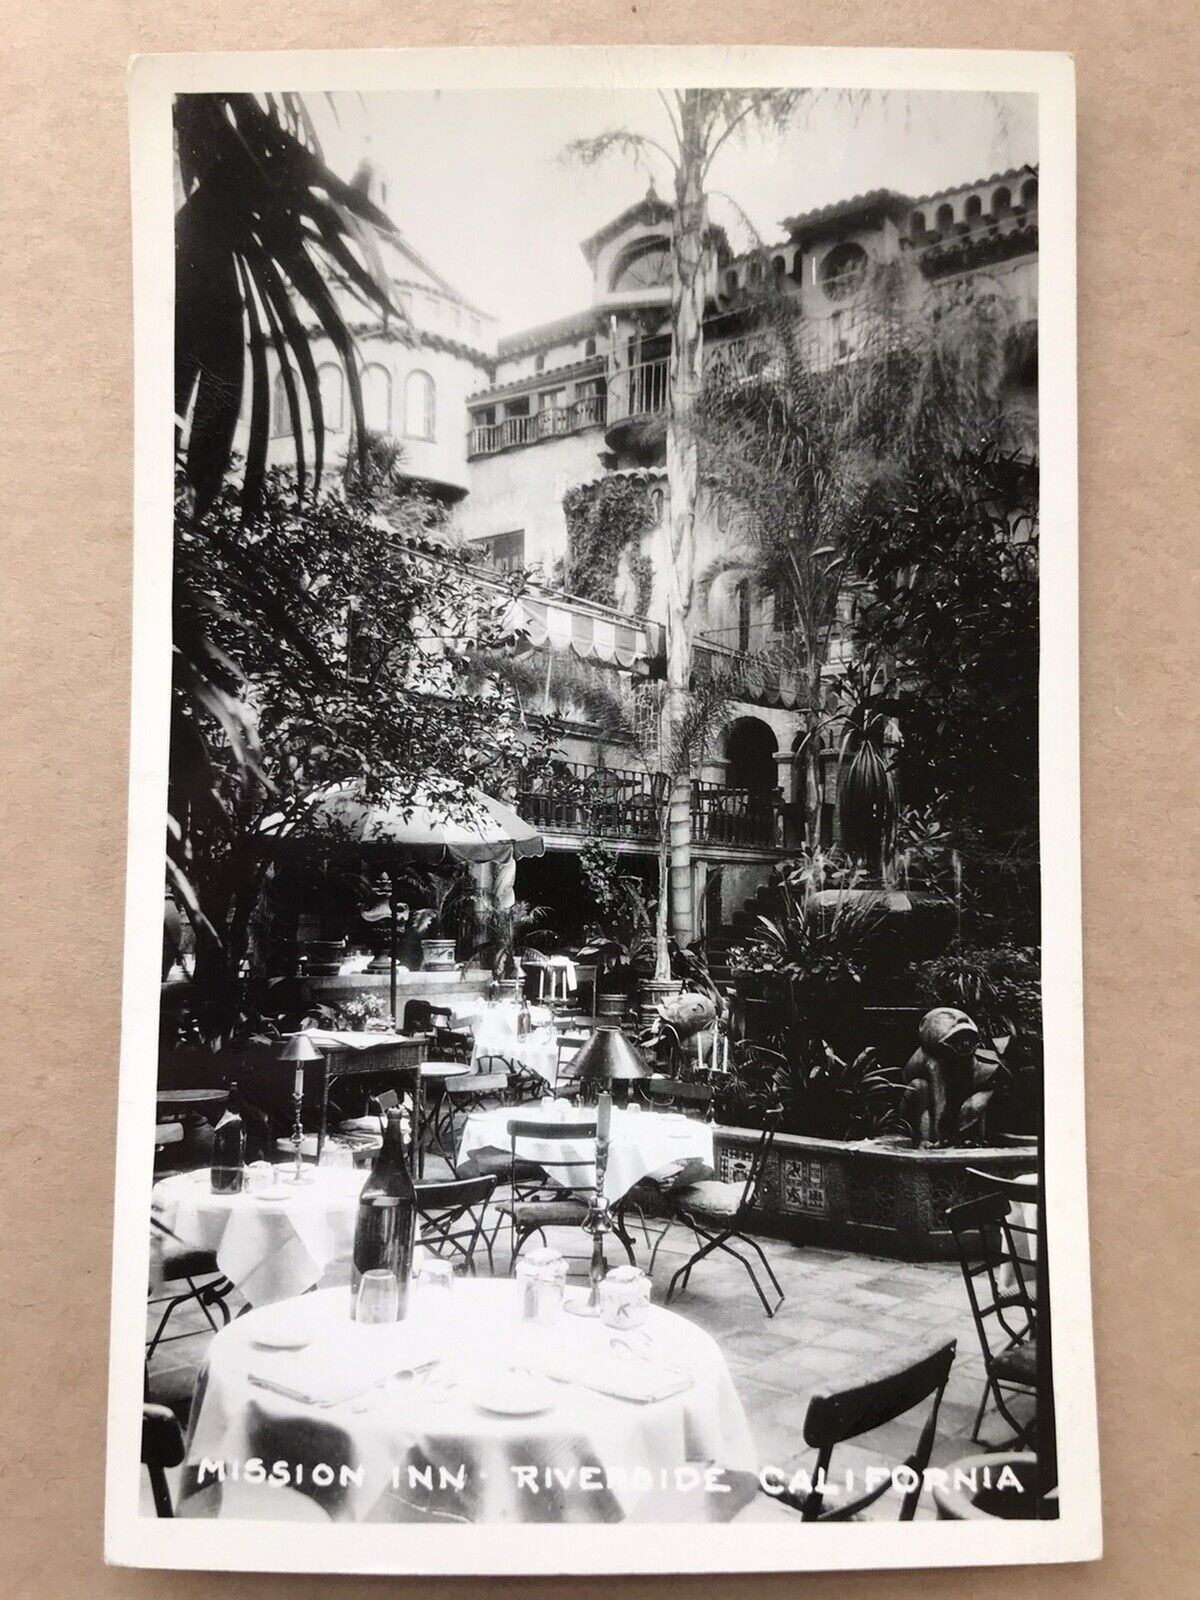 RPPC Mission Inn, Riverside California Un-Posted Los Angeles Photo Post Card Co.